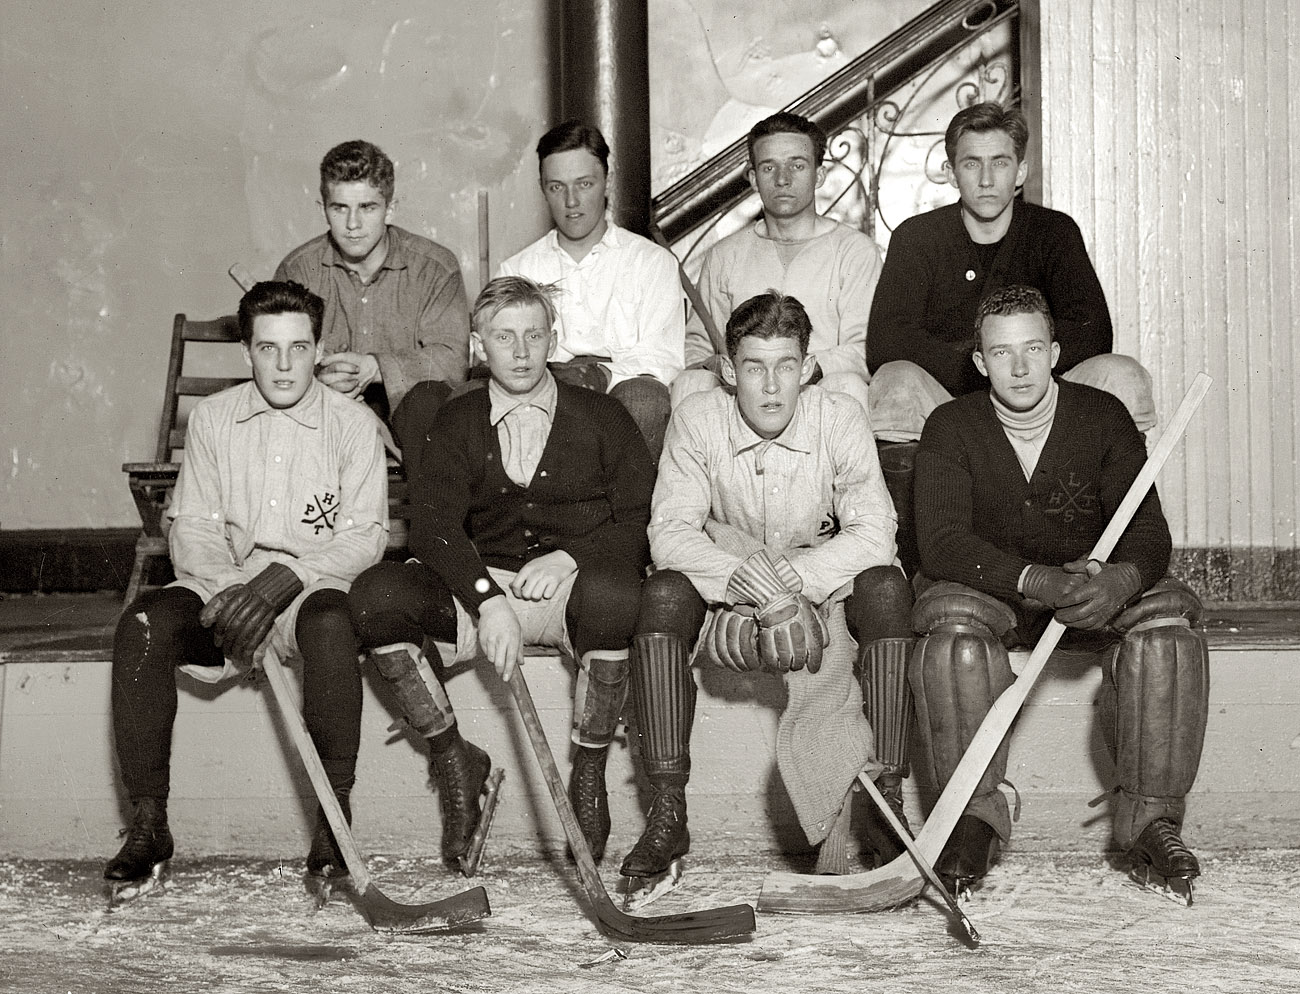 The Princeton hockey team circa 1910. View full size. G.G. Bain Collection.